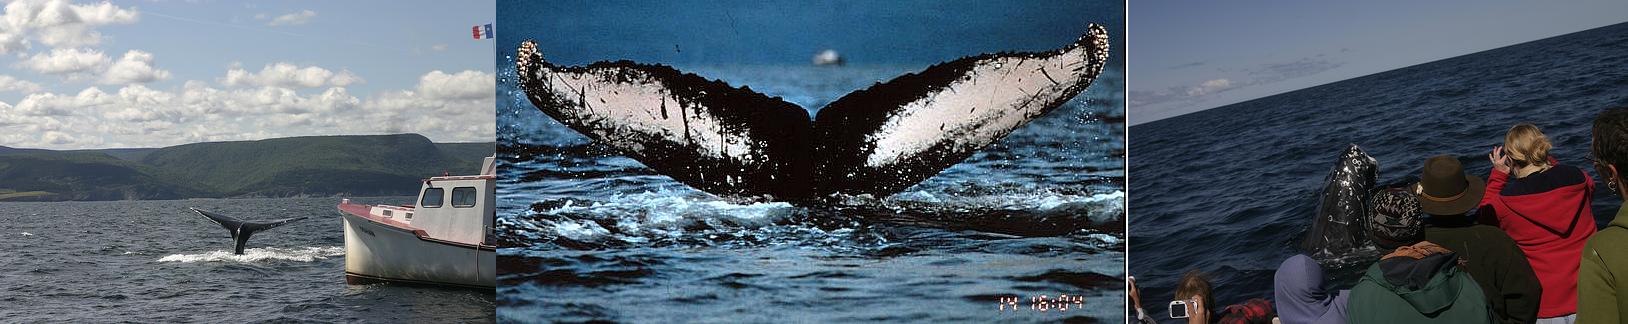 whale-watching_(C)_US_NOAA-tylerc083-Flick.jpg